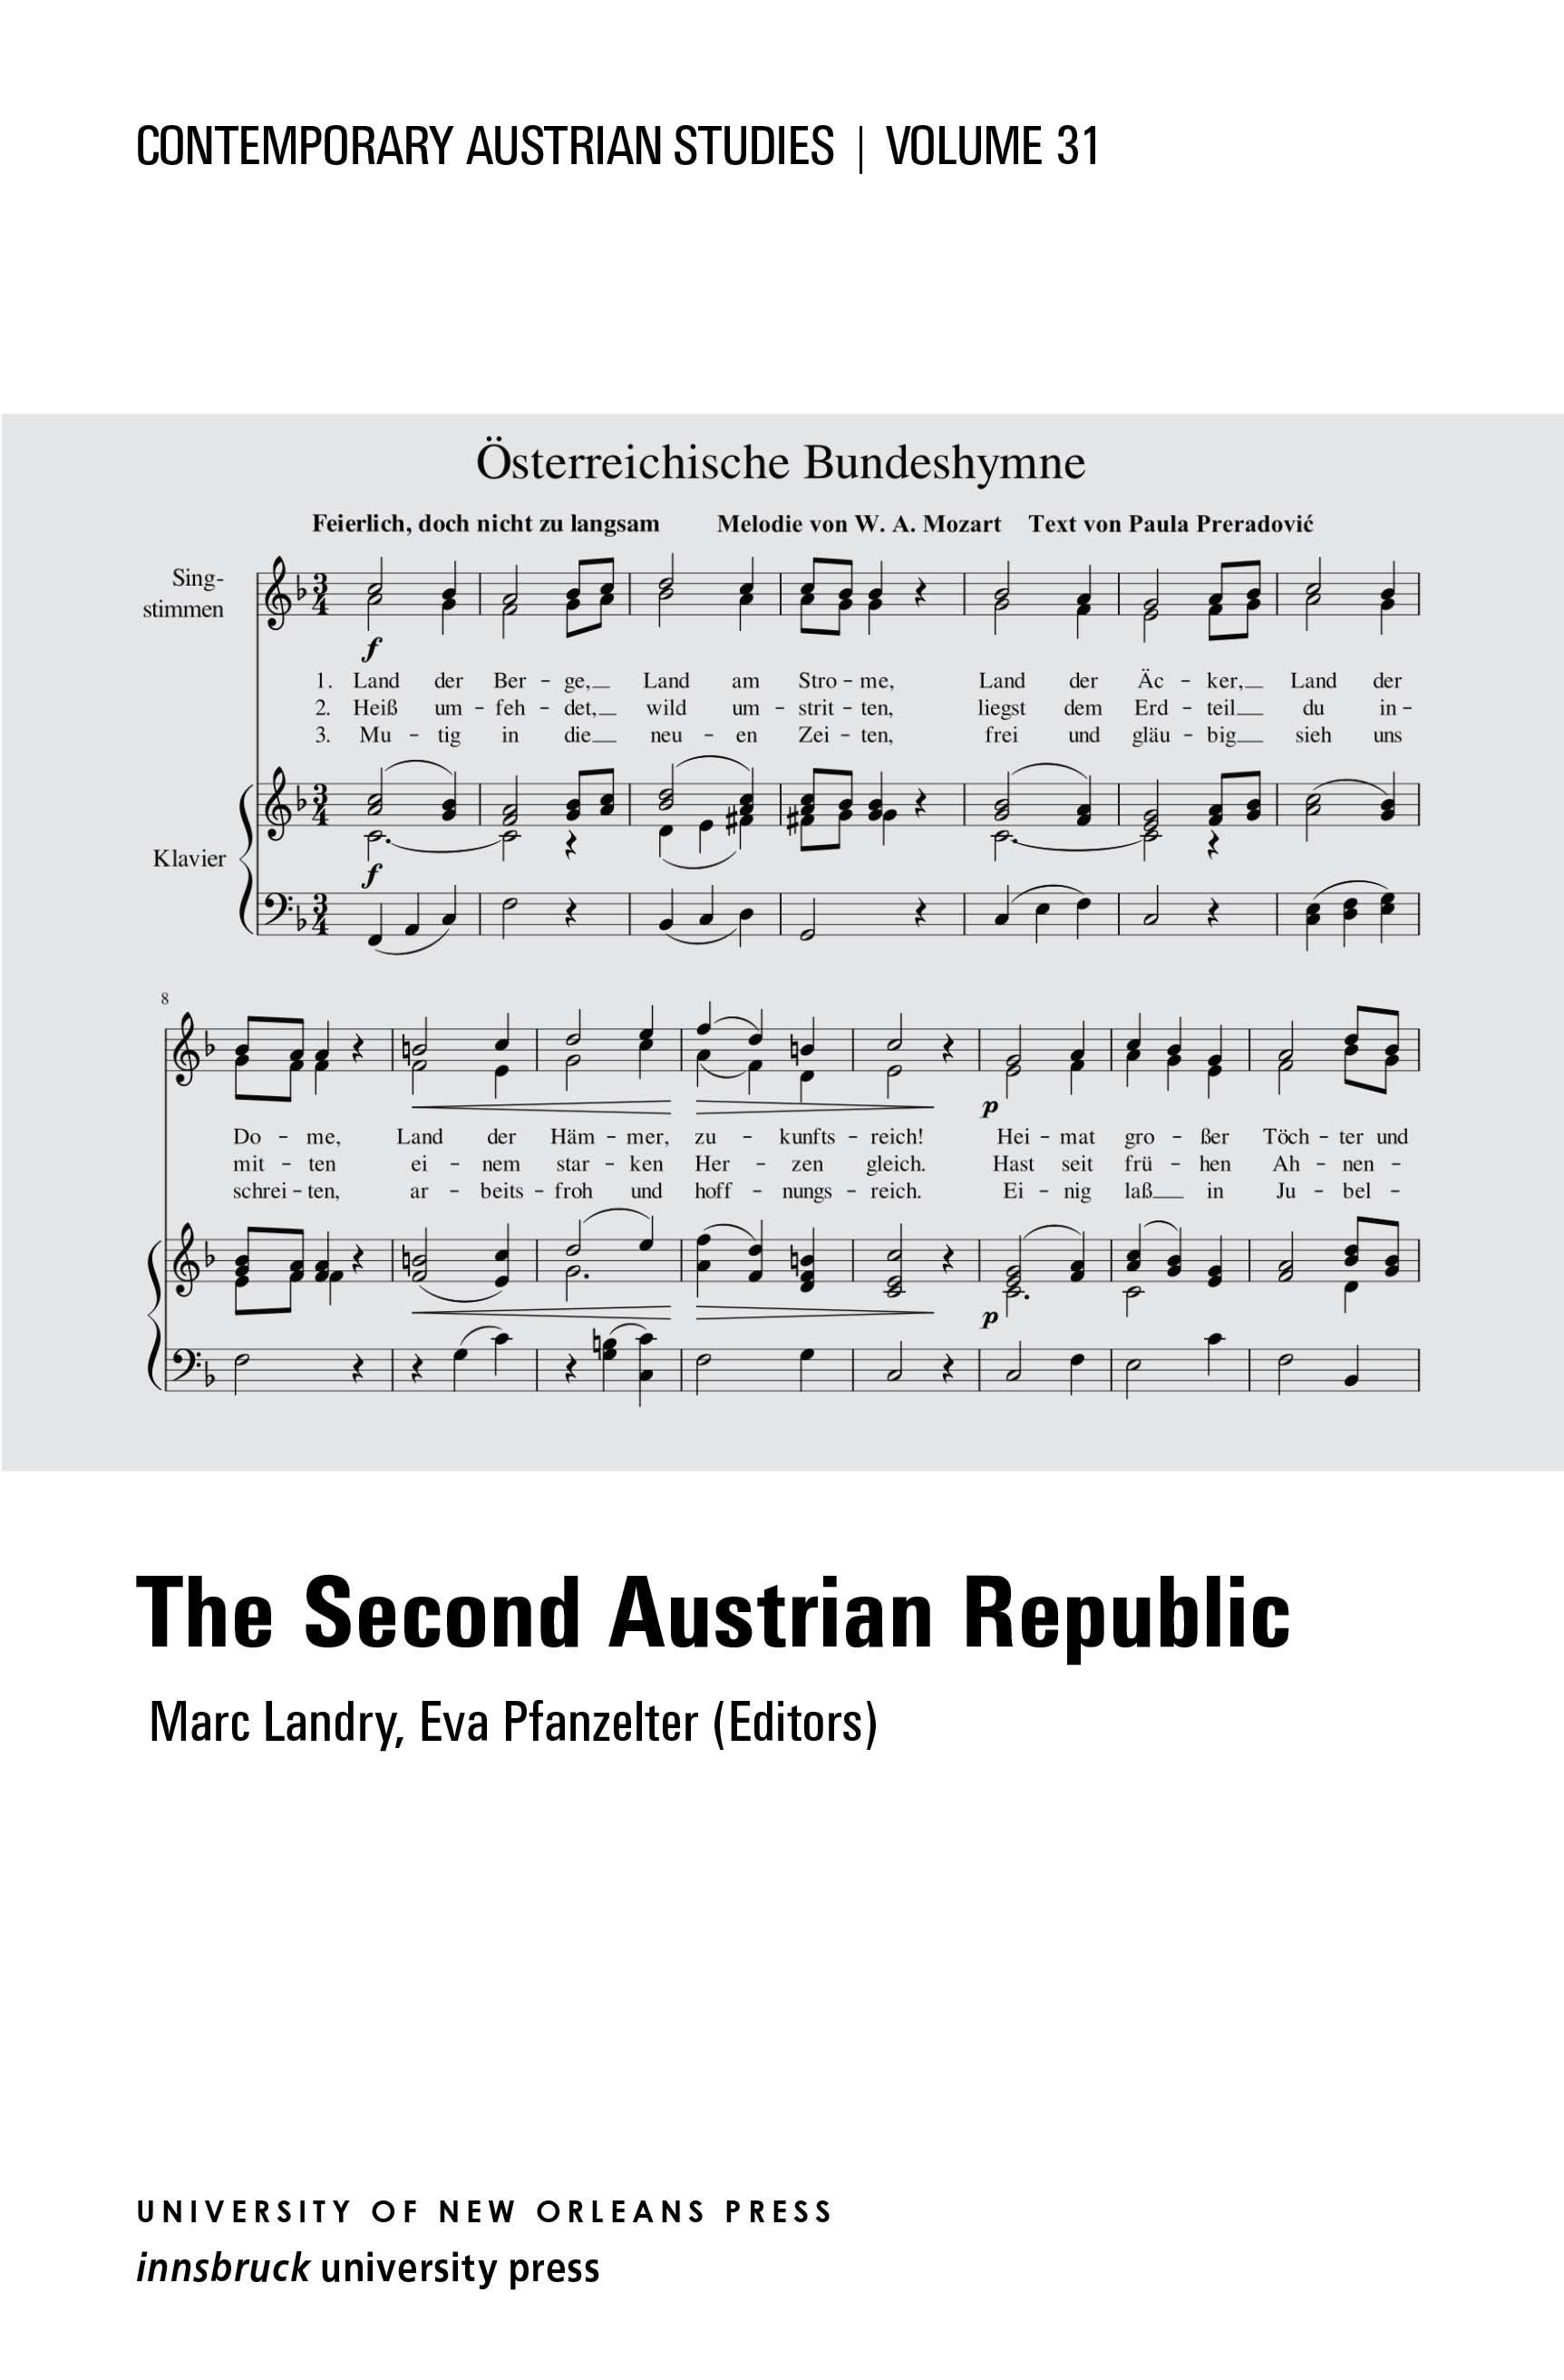 The Austrian Second Republic cover -- CAS Vol. 31